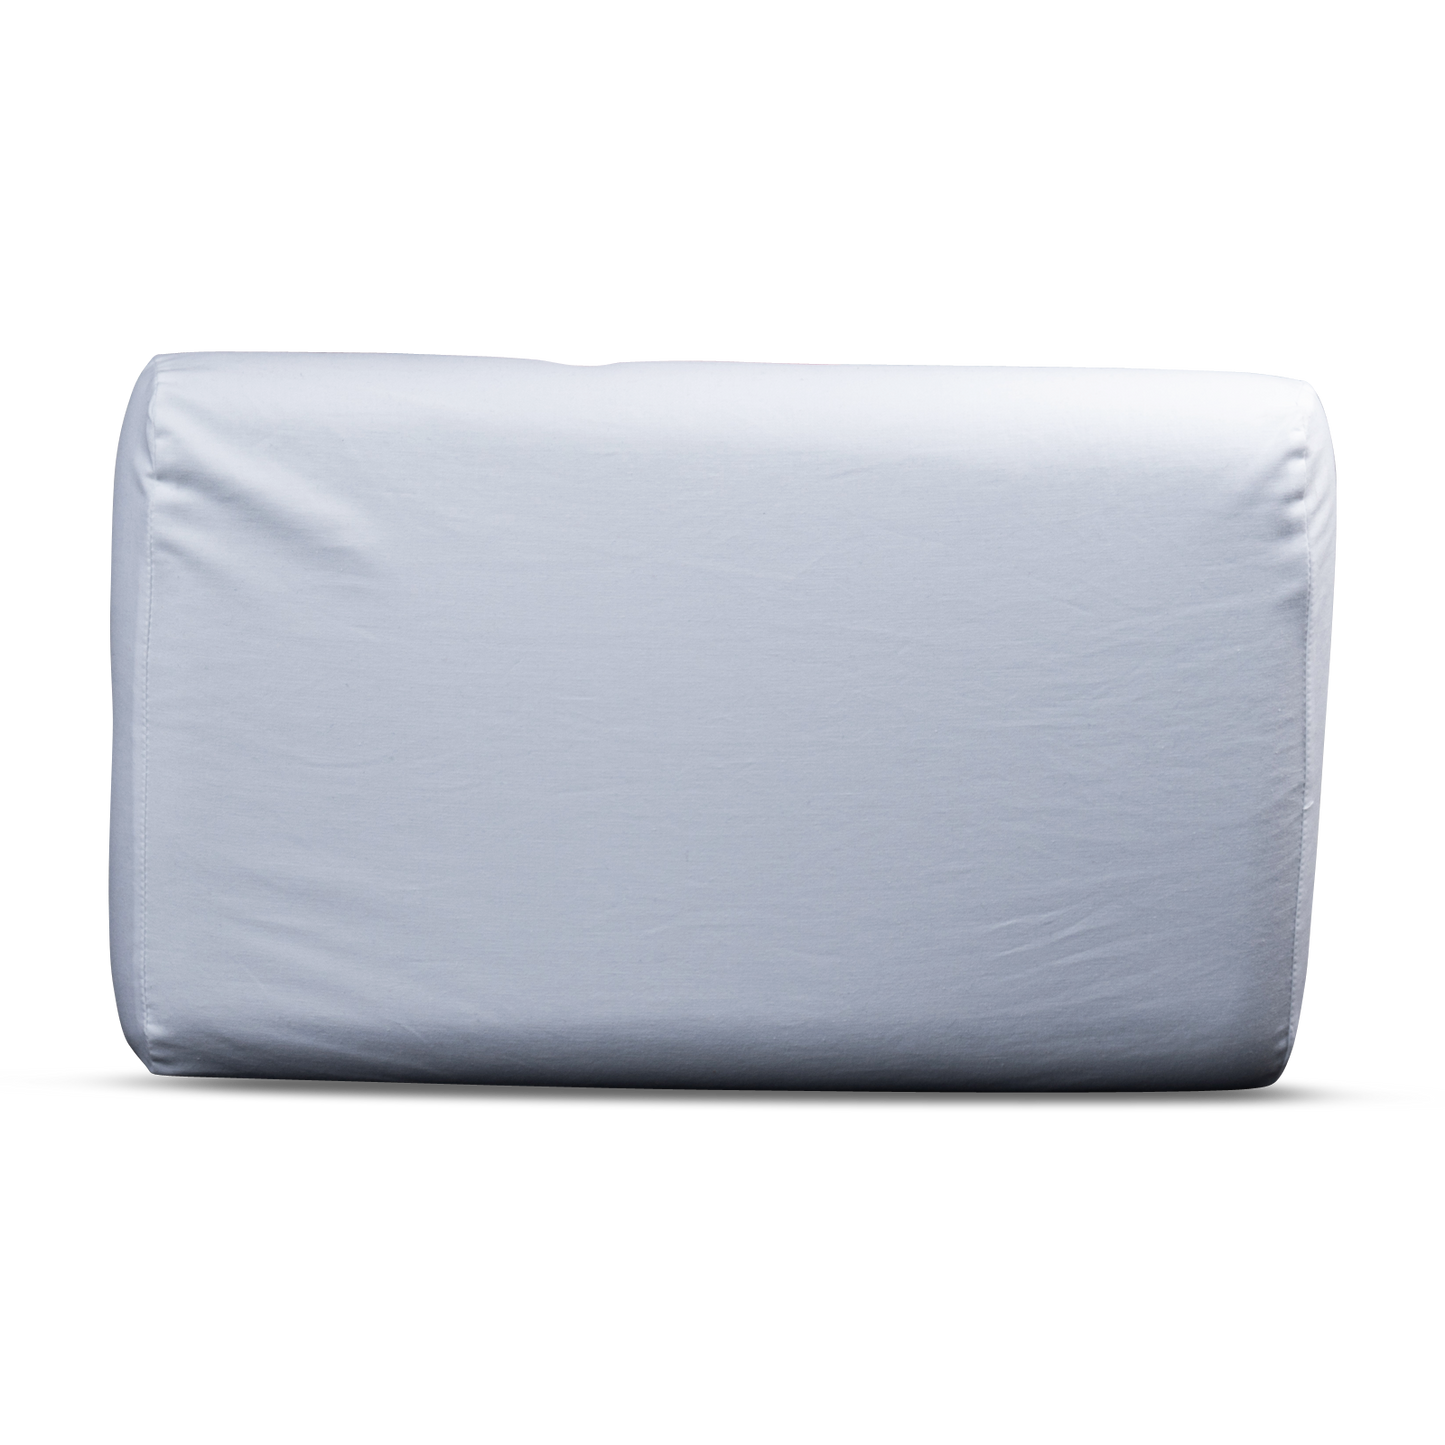 SleepCool Pillow - Contoured Fusion Gel Cooling Memory Foam Pillow